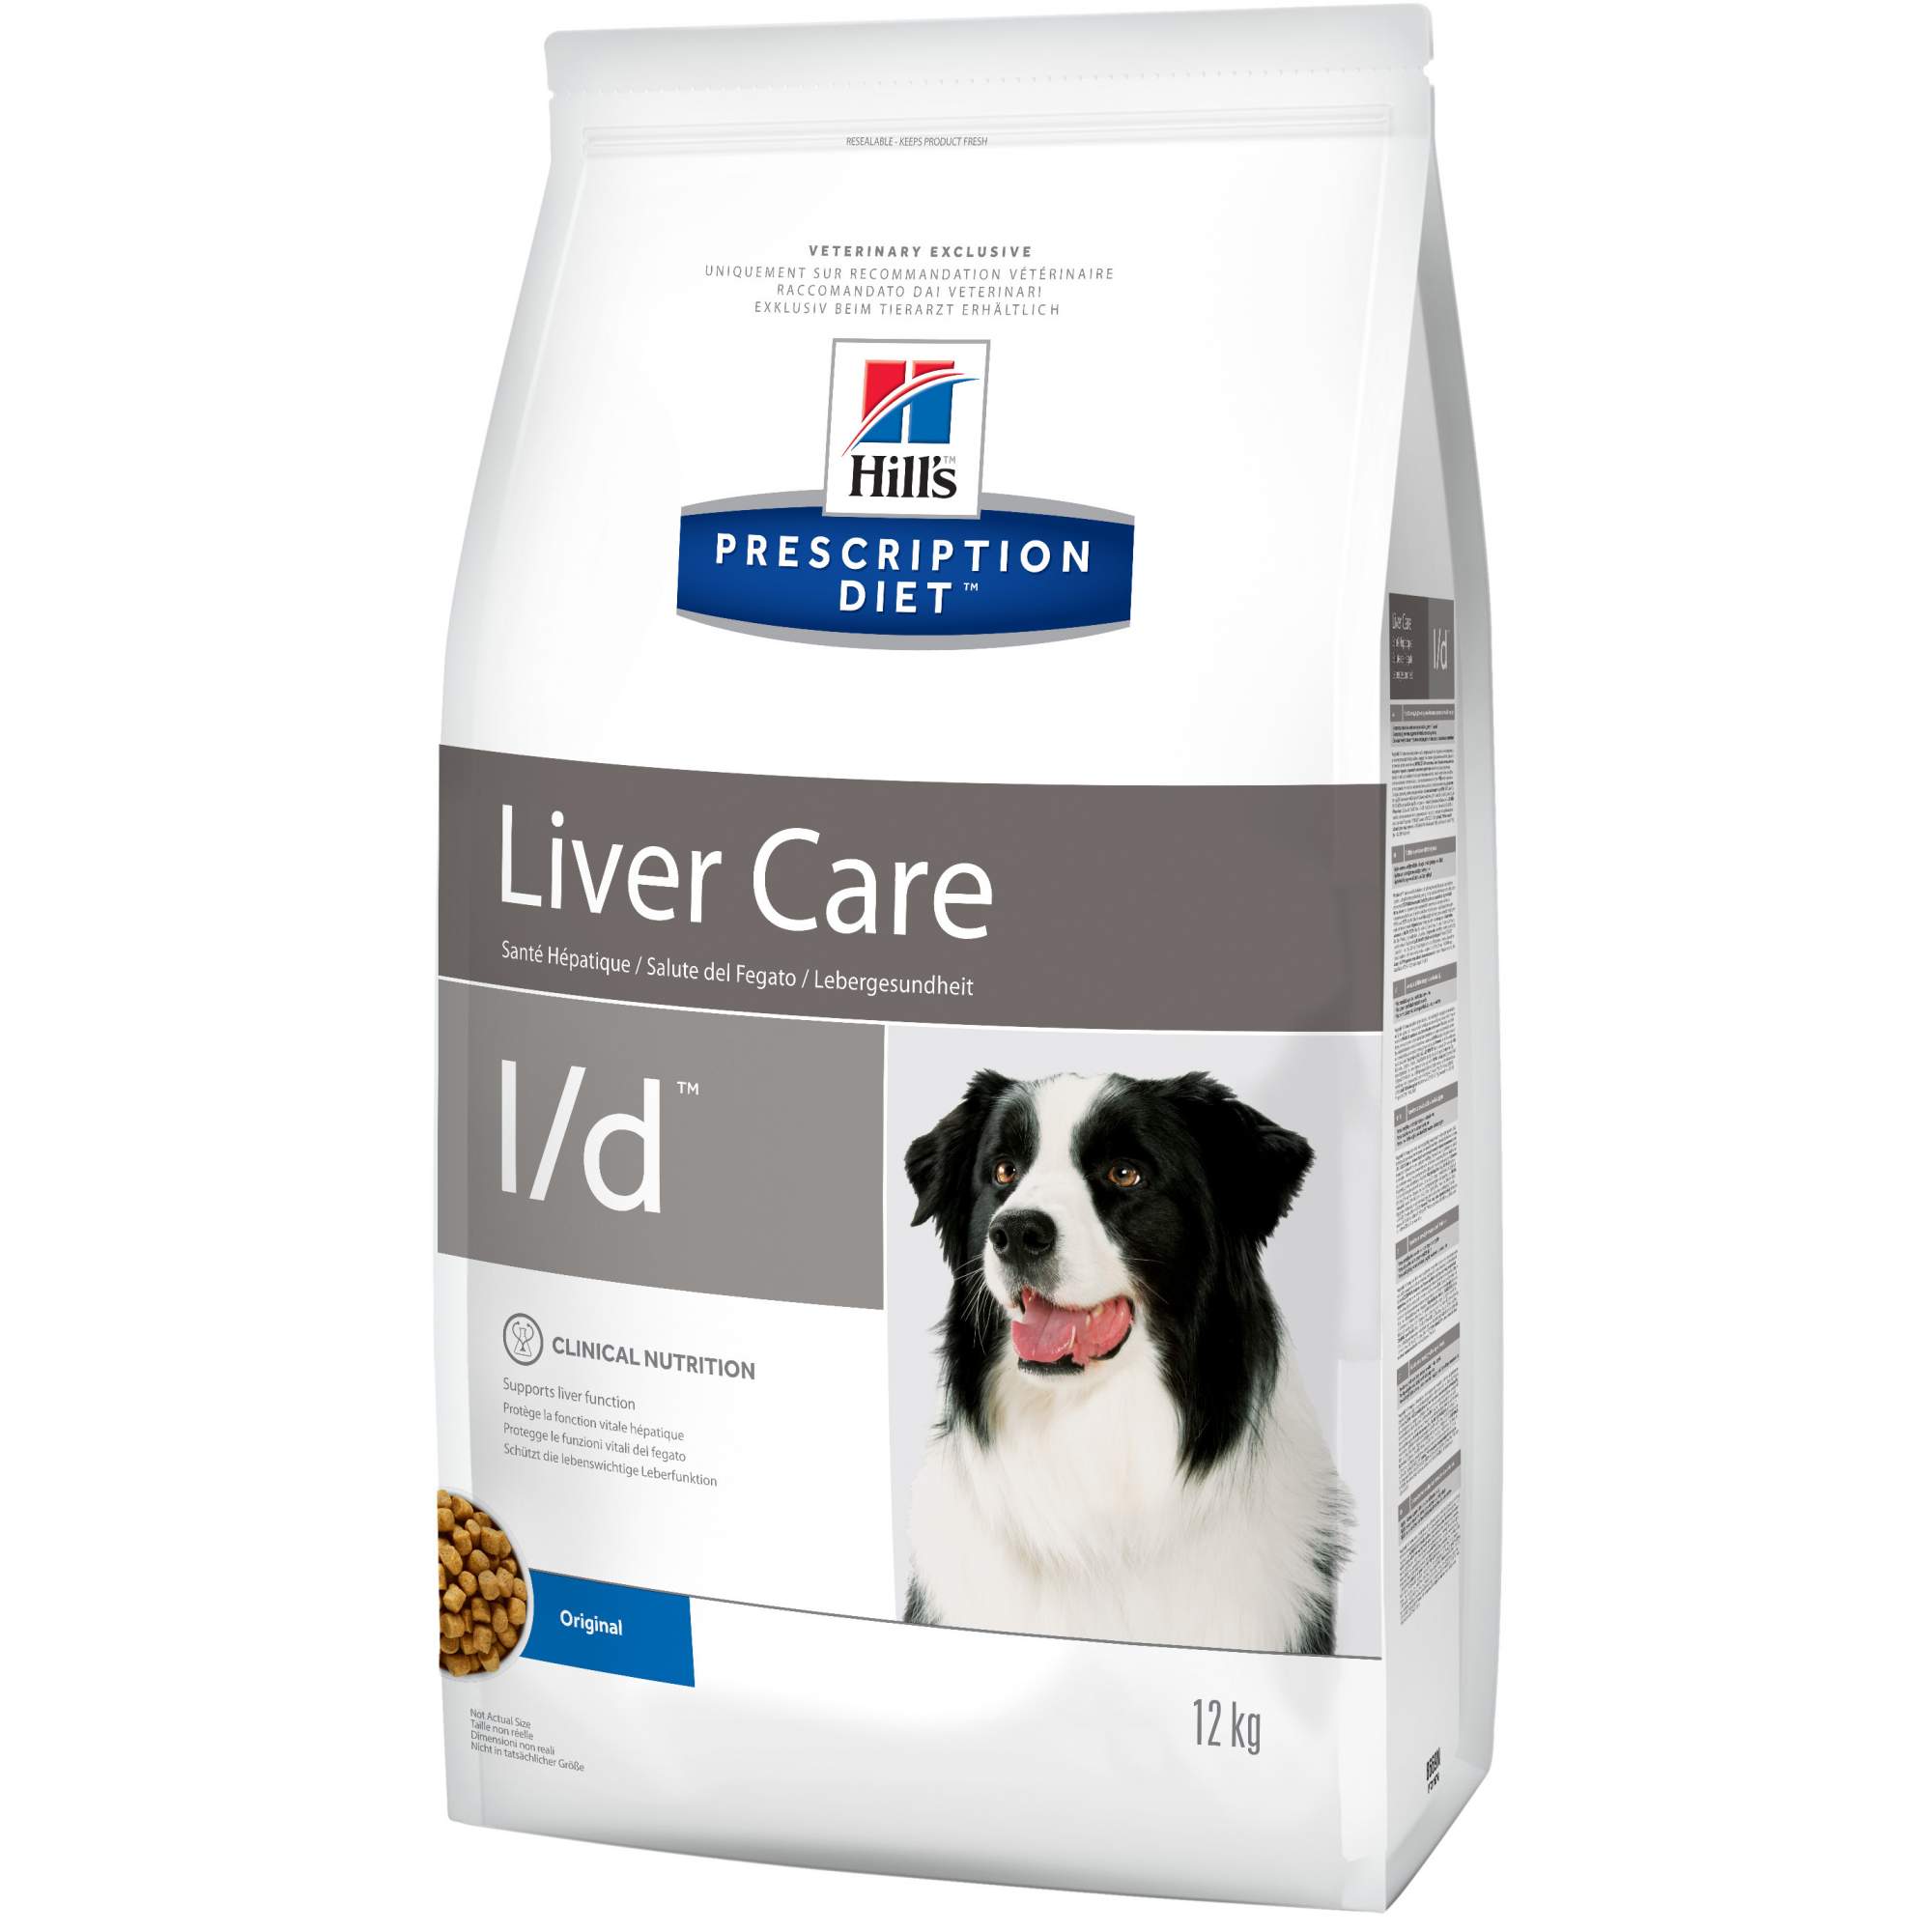 Корм hepatic для собак. Hill's Prescription Diet l/d canine. Hill's Prescription Diet для собак. Liver Care l/d для собак. Hills u/d canine для собак.